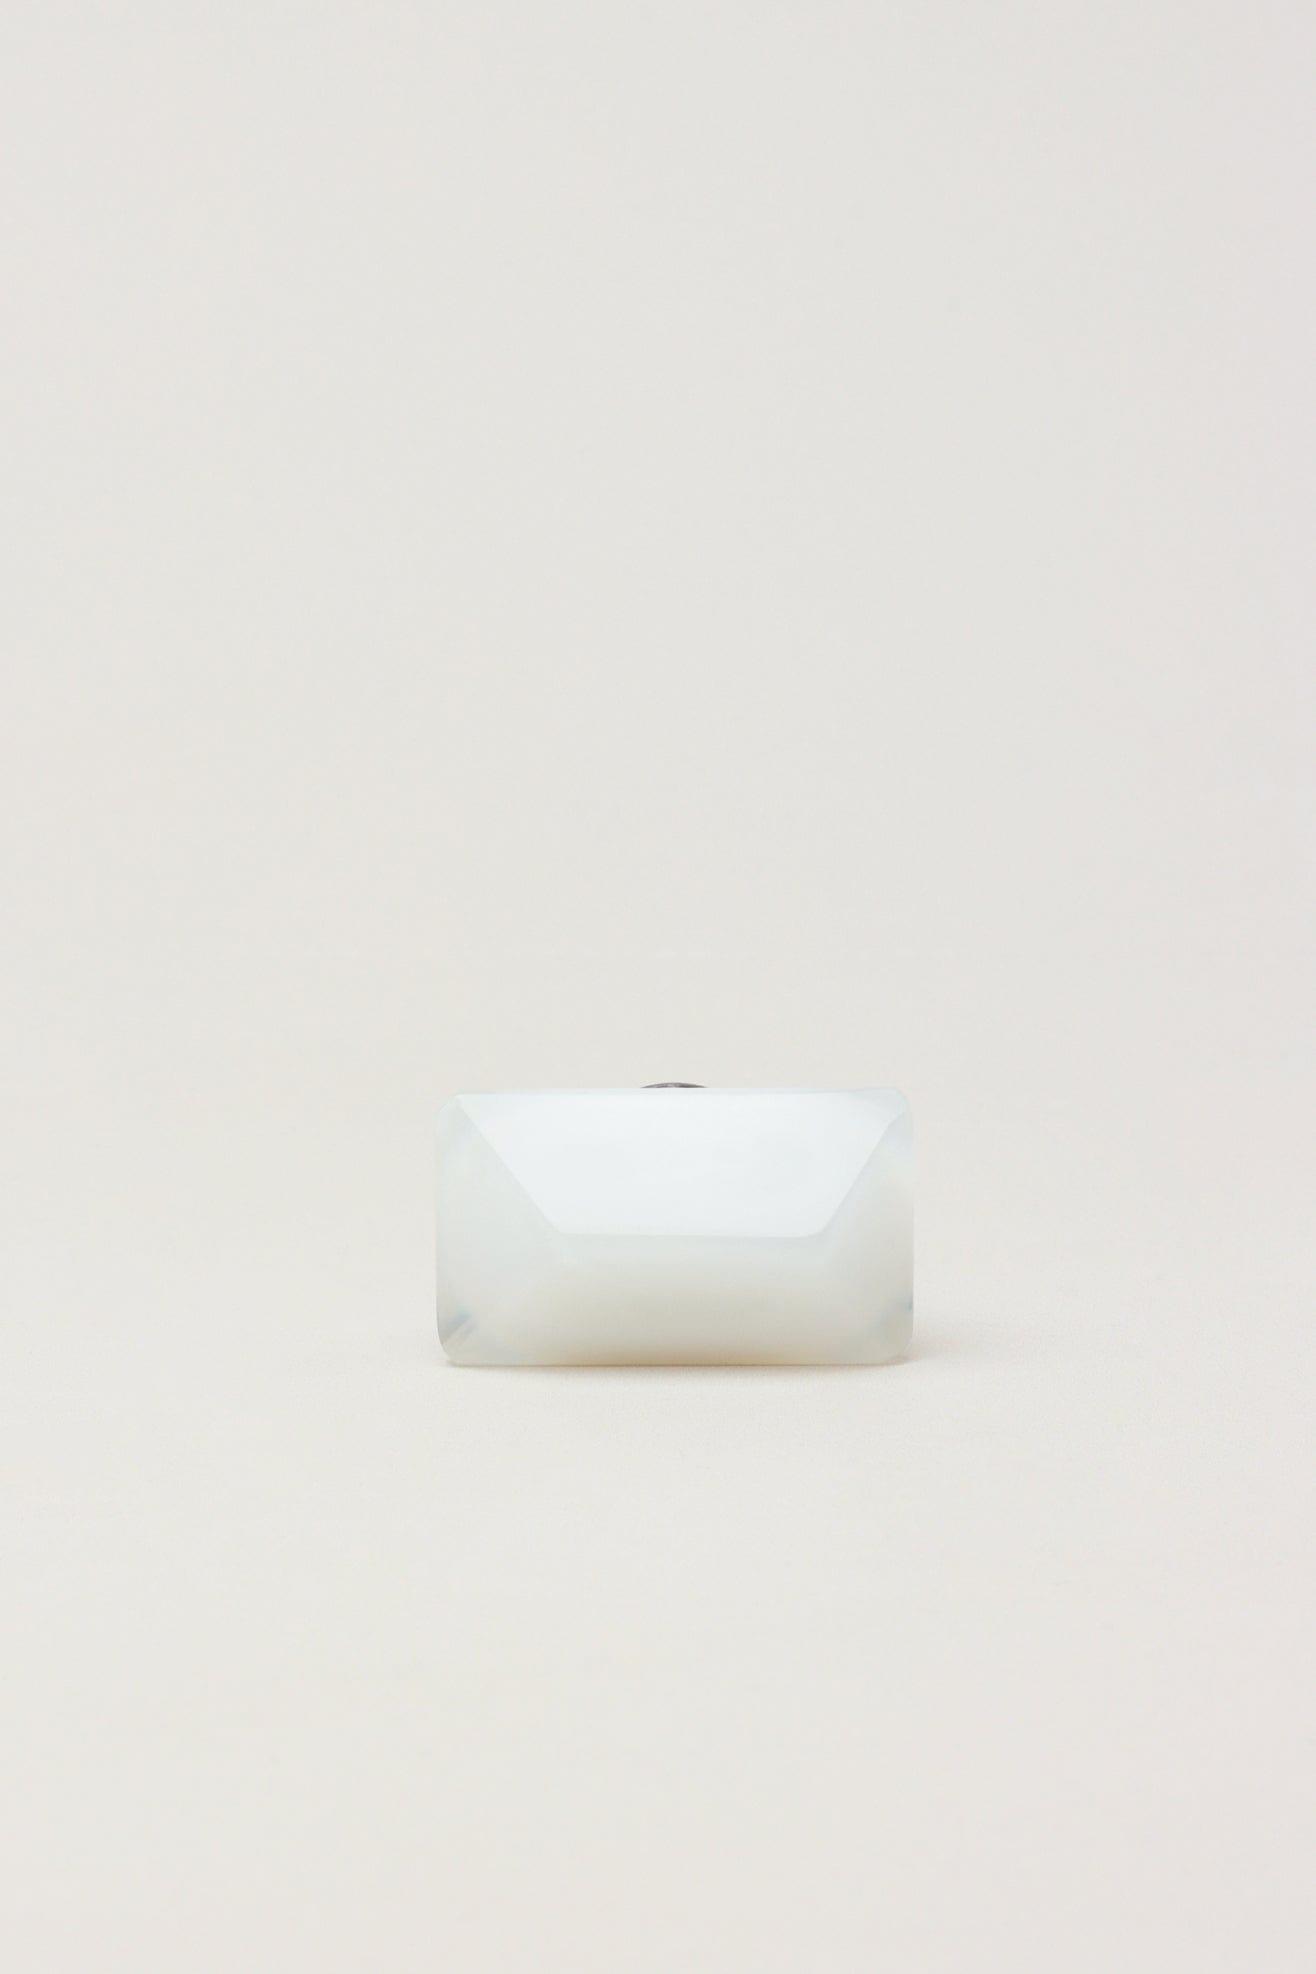 G Decor Cabinet Knobs & Handles Milk-White Javier Crystal Rectangular Mirror Glass Pull Knobs